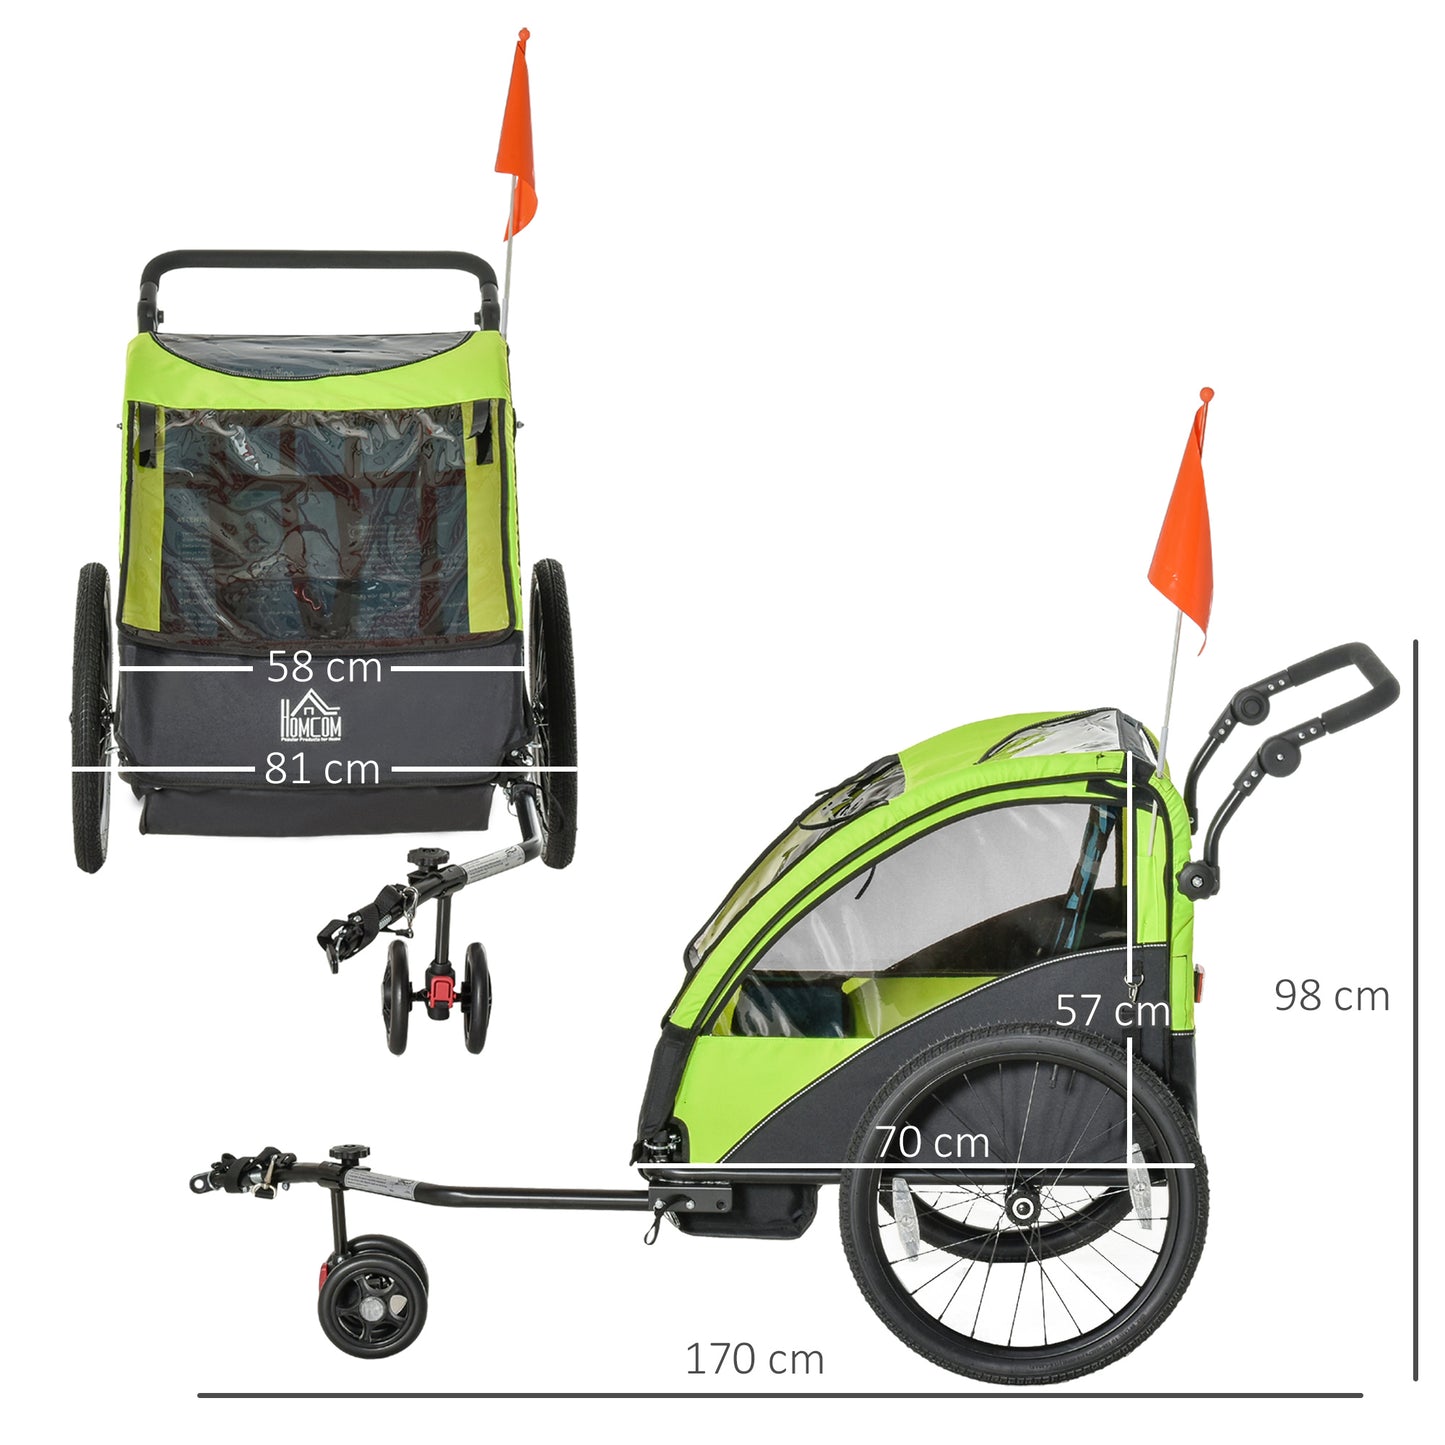 HOMCOM 2 In 1 Trailer for Kids Child Bike Trailer Foldable Stroller 2-Seat w/ Adjustable Handlebar